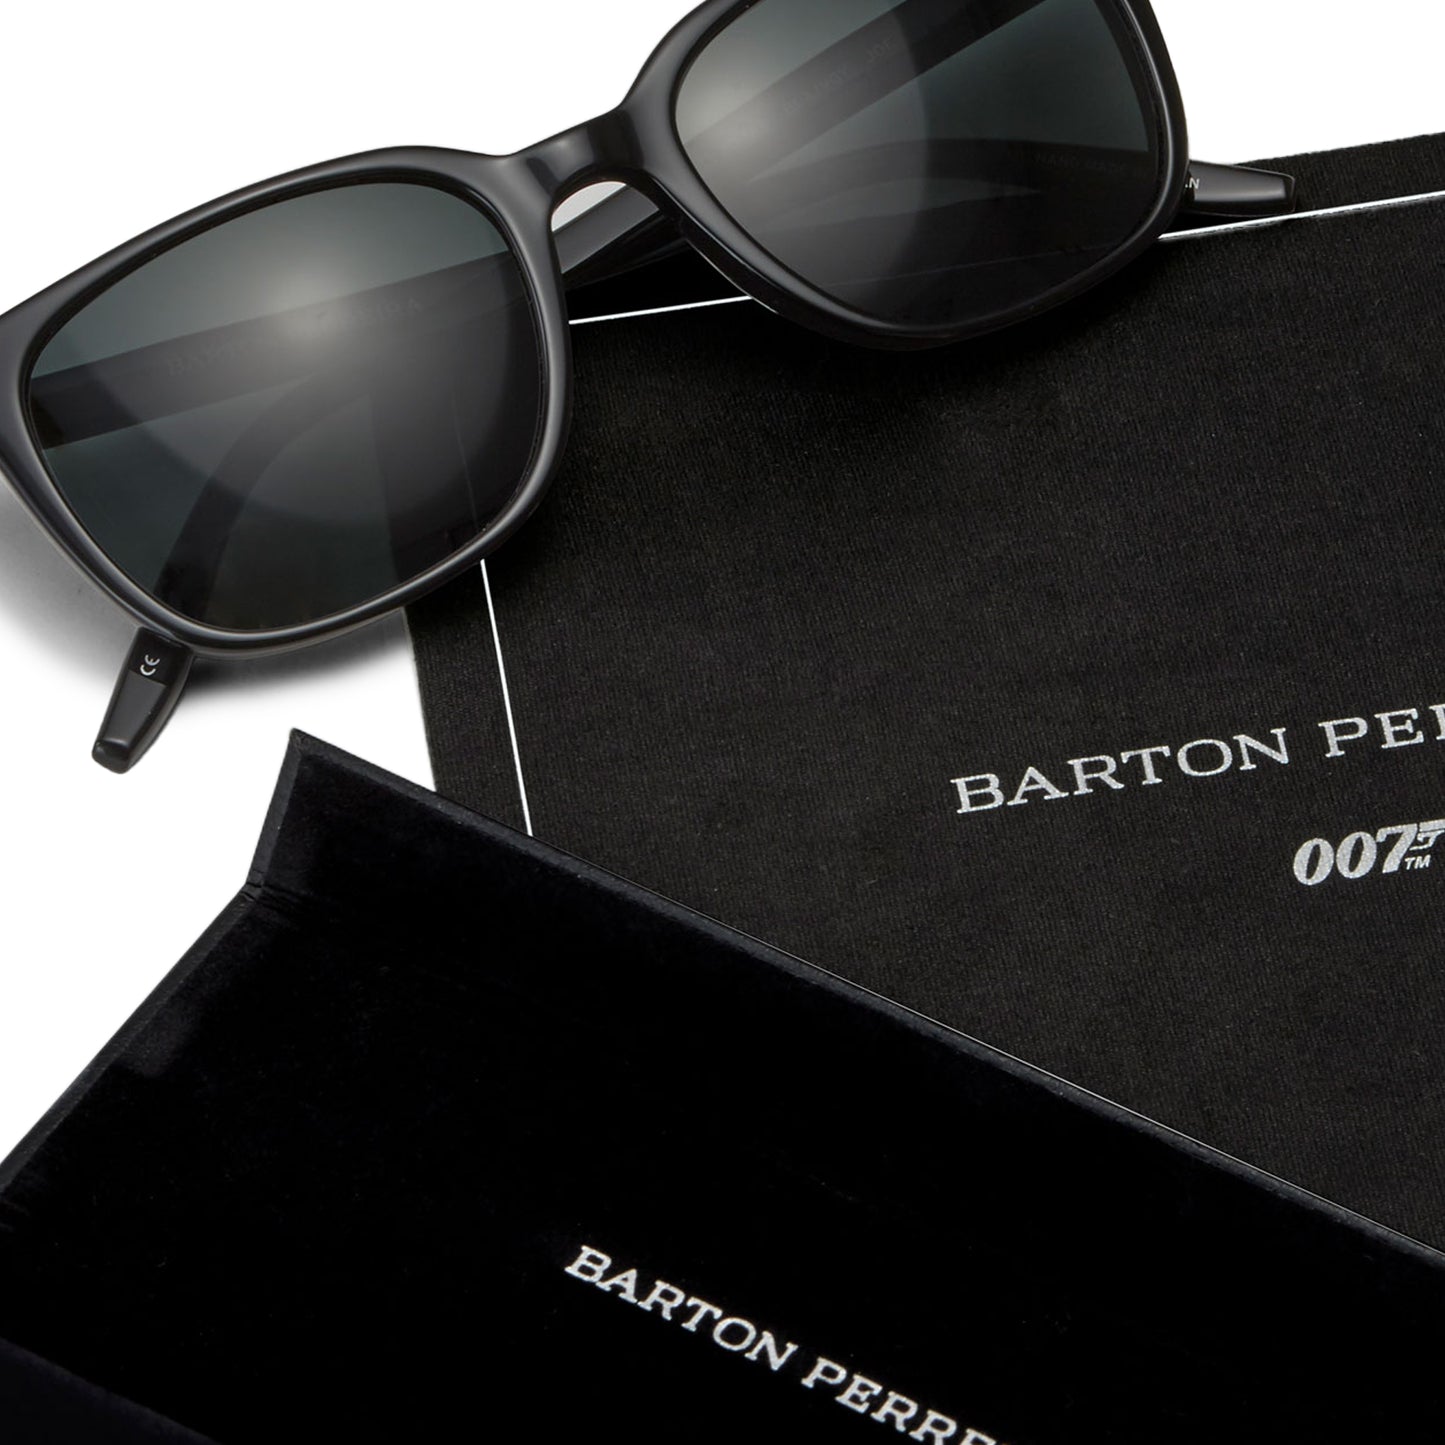 Barton Perreira 007 Joe Sunglasses